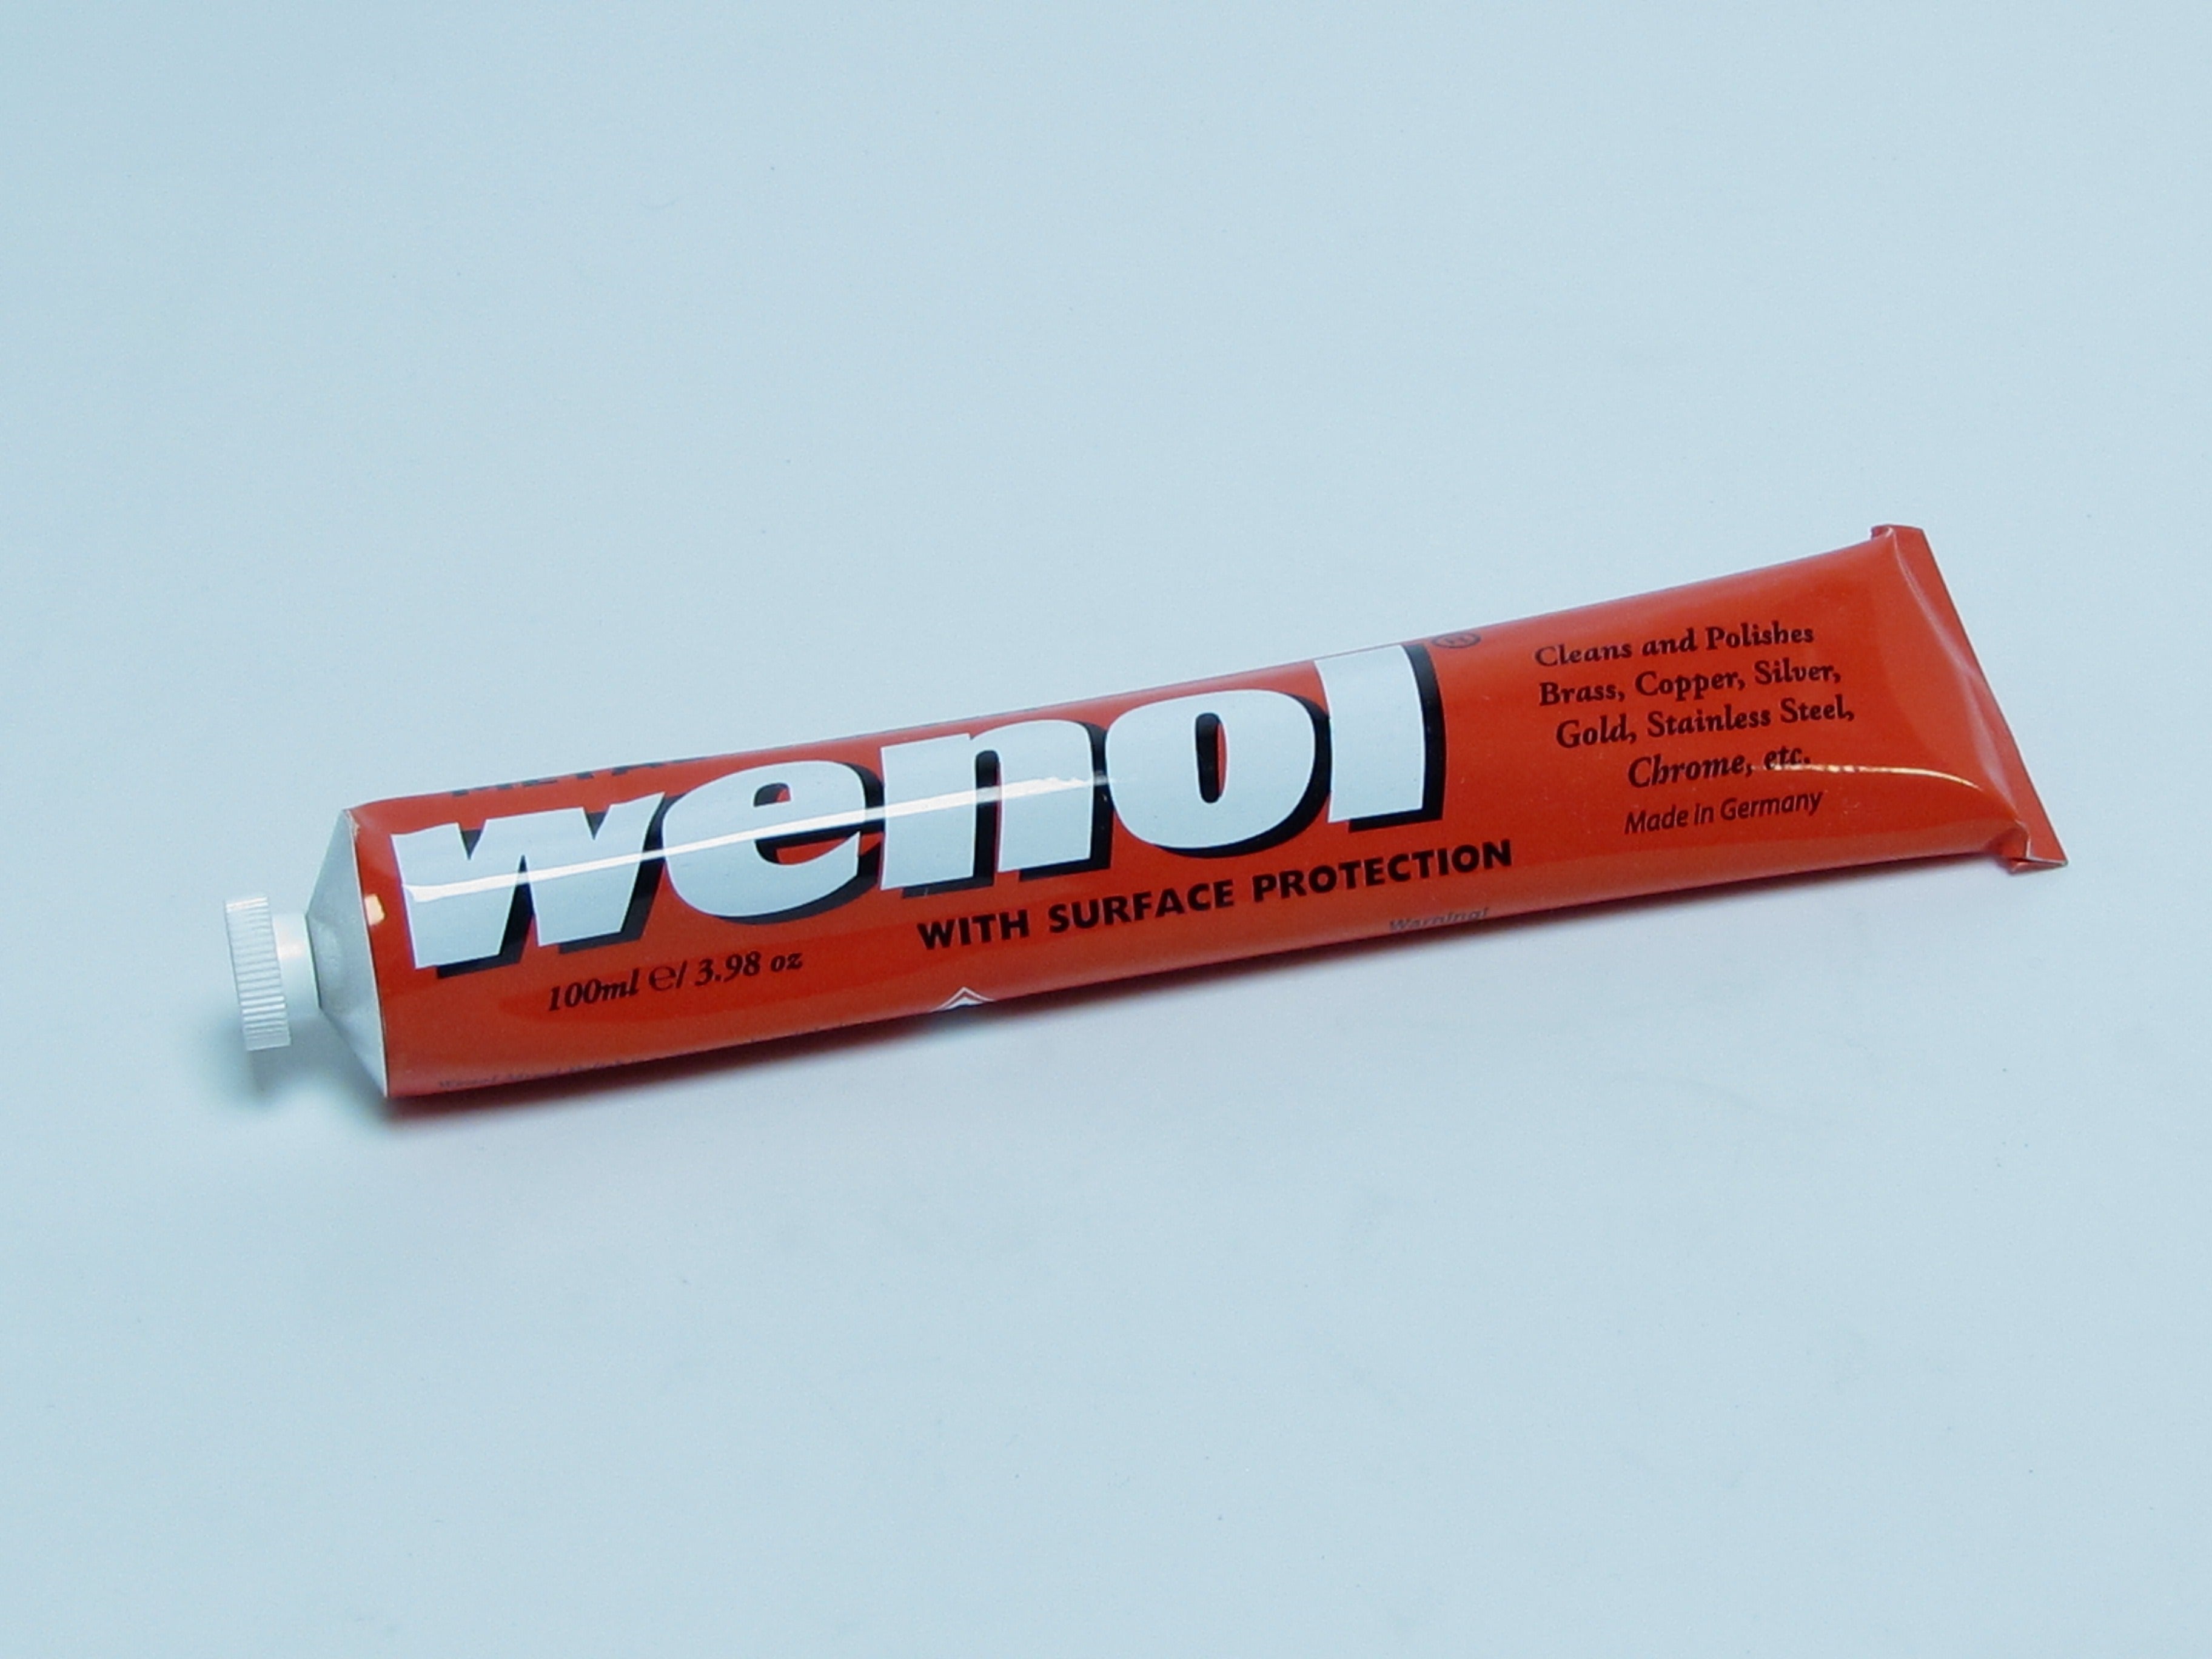 Wenol polish 100 ml tube best for sterling